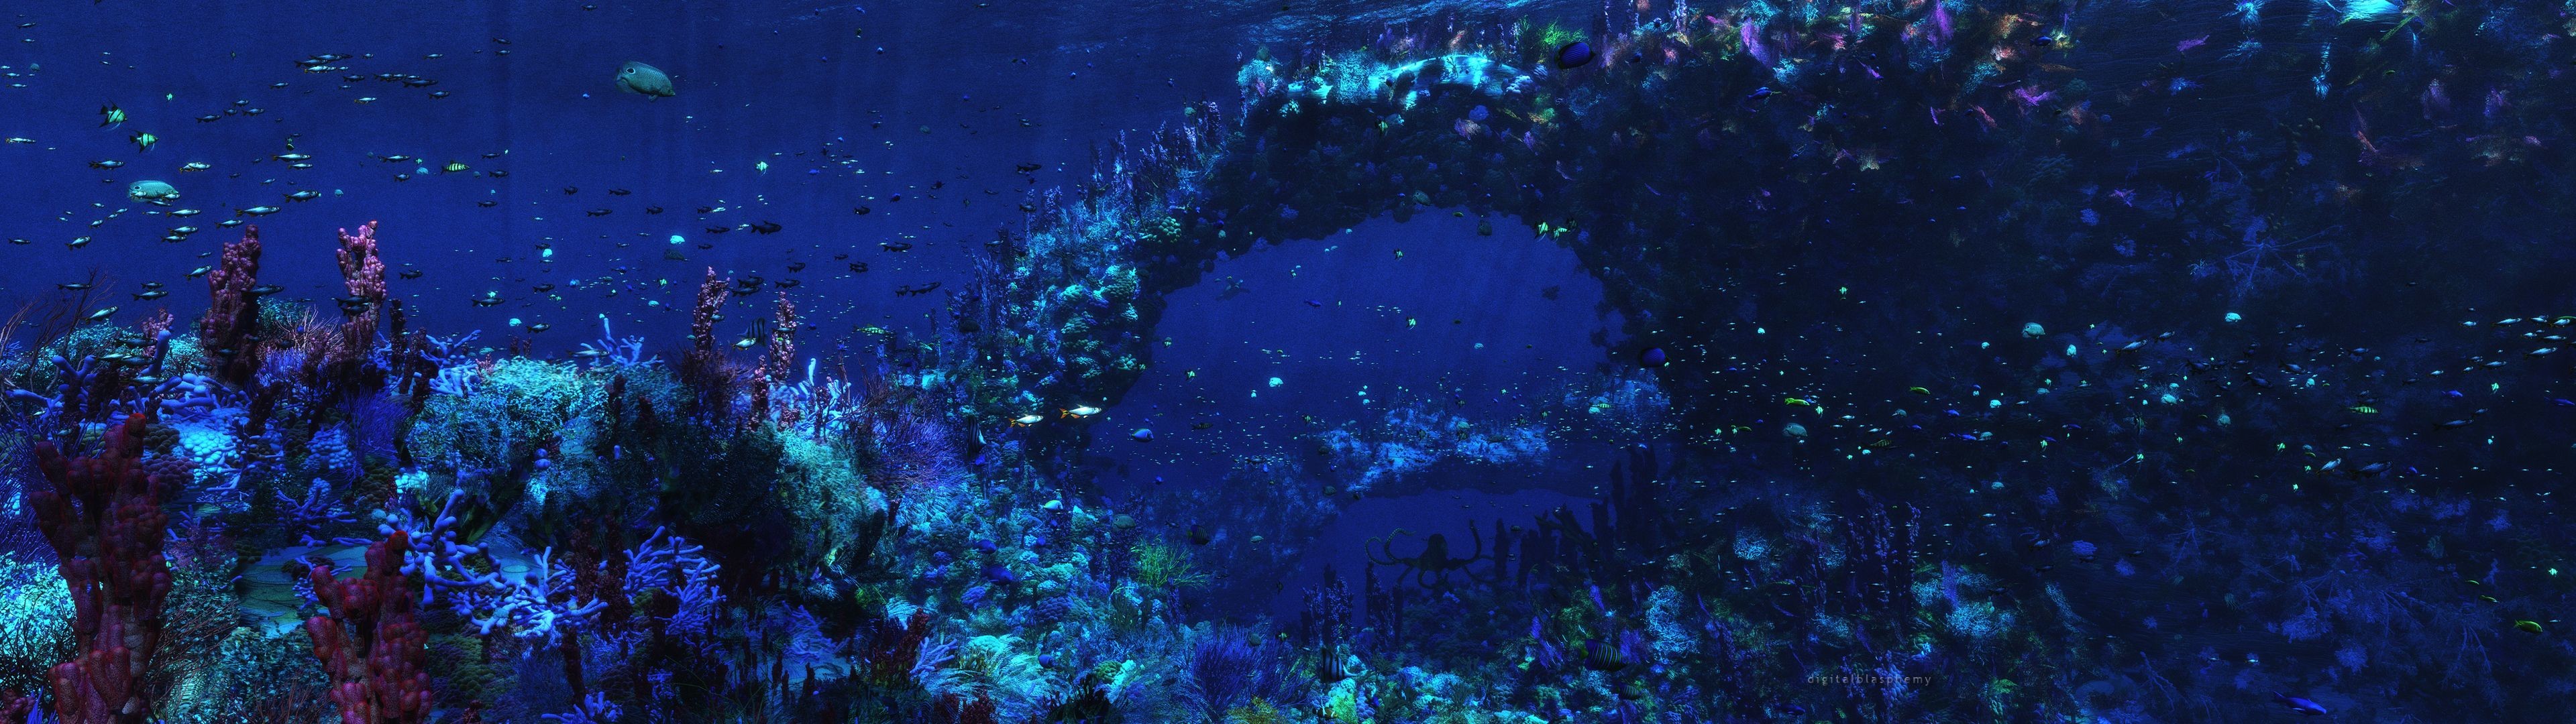 3840x1080 Deep Under the Ocean Dual Monitor Wallpaper 